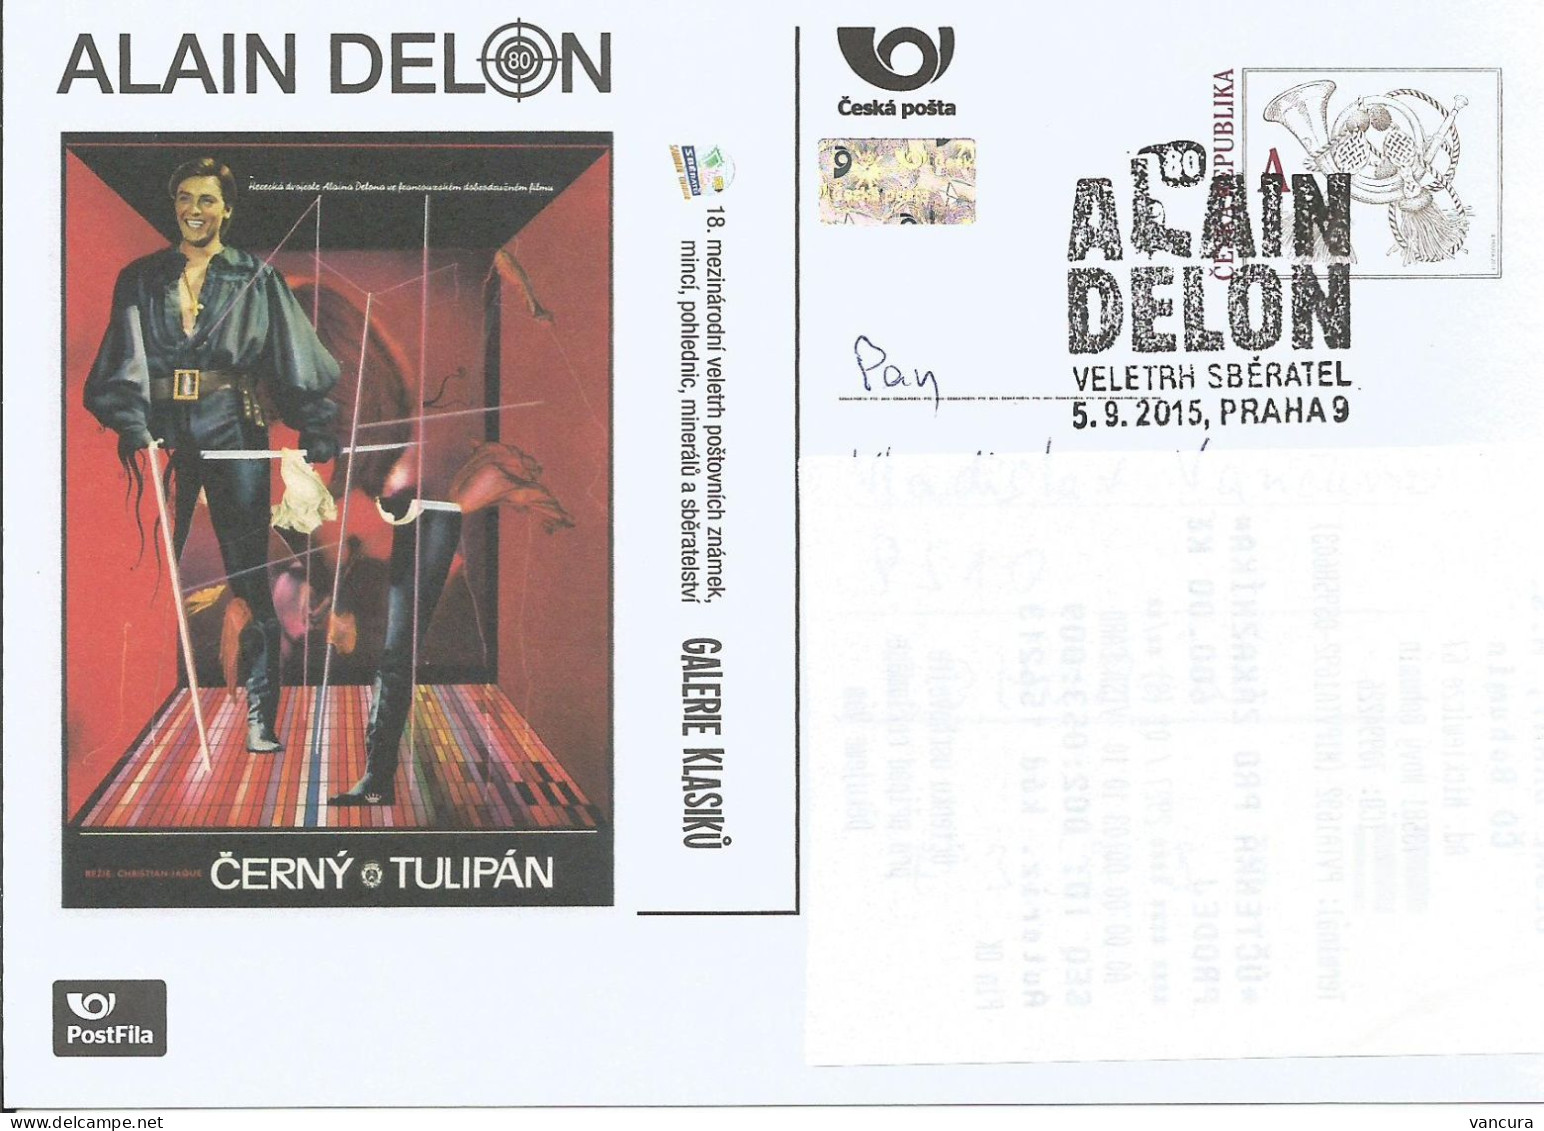 Postfila Card Czech Republic Sberatel Prague 2015 Alain Delon - Cartoline Postali